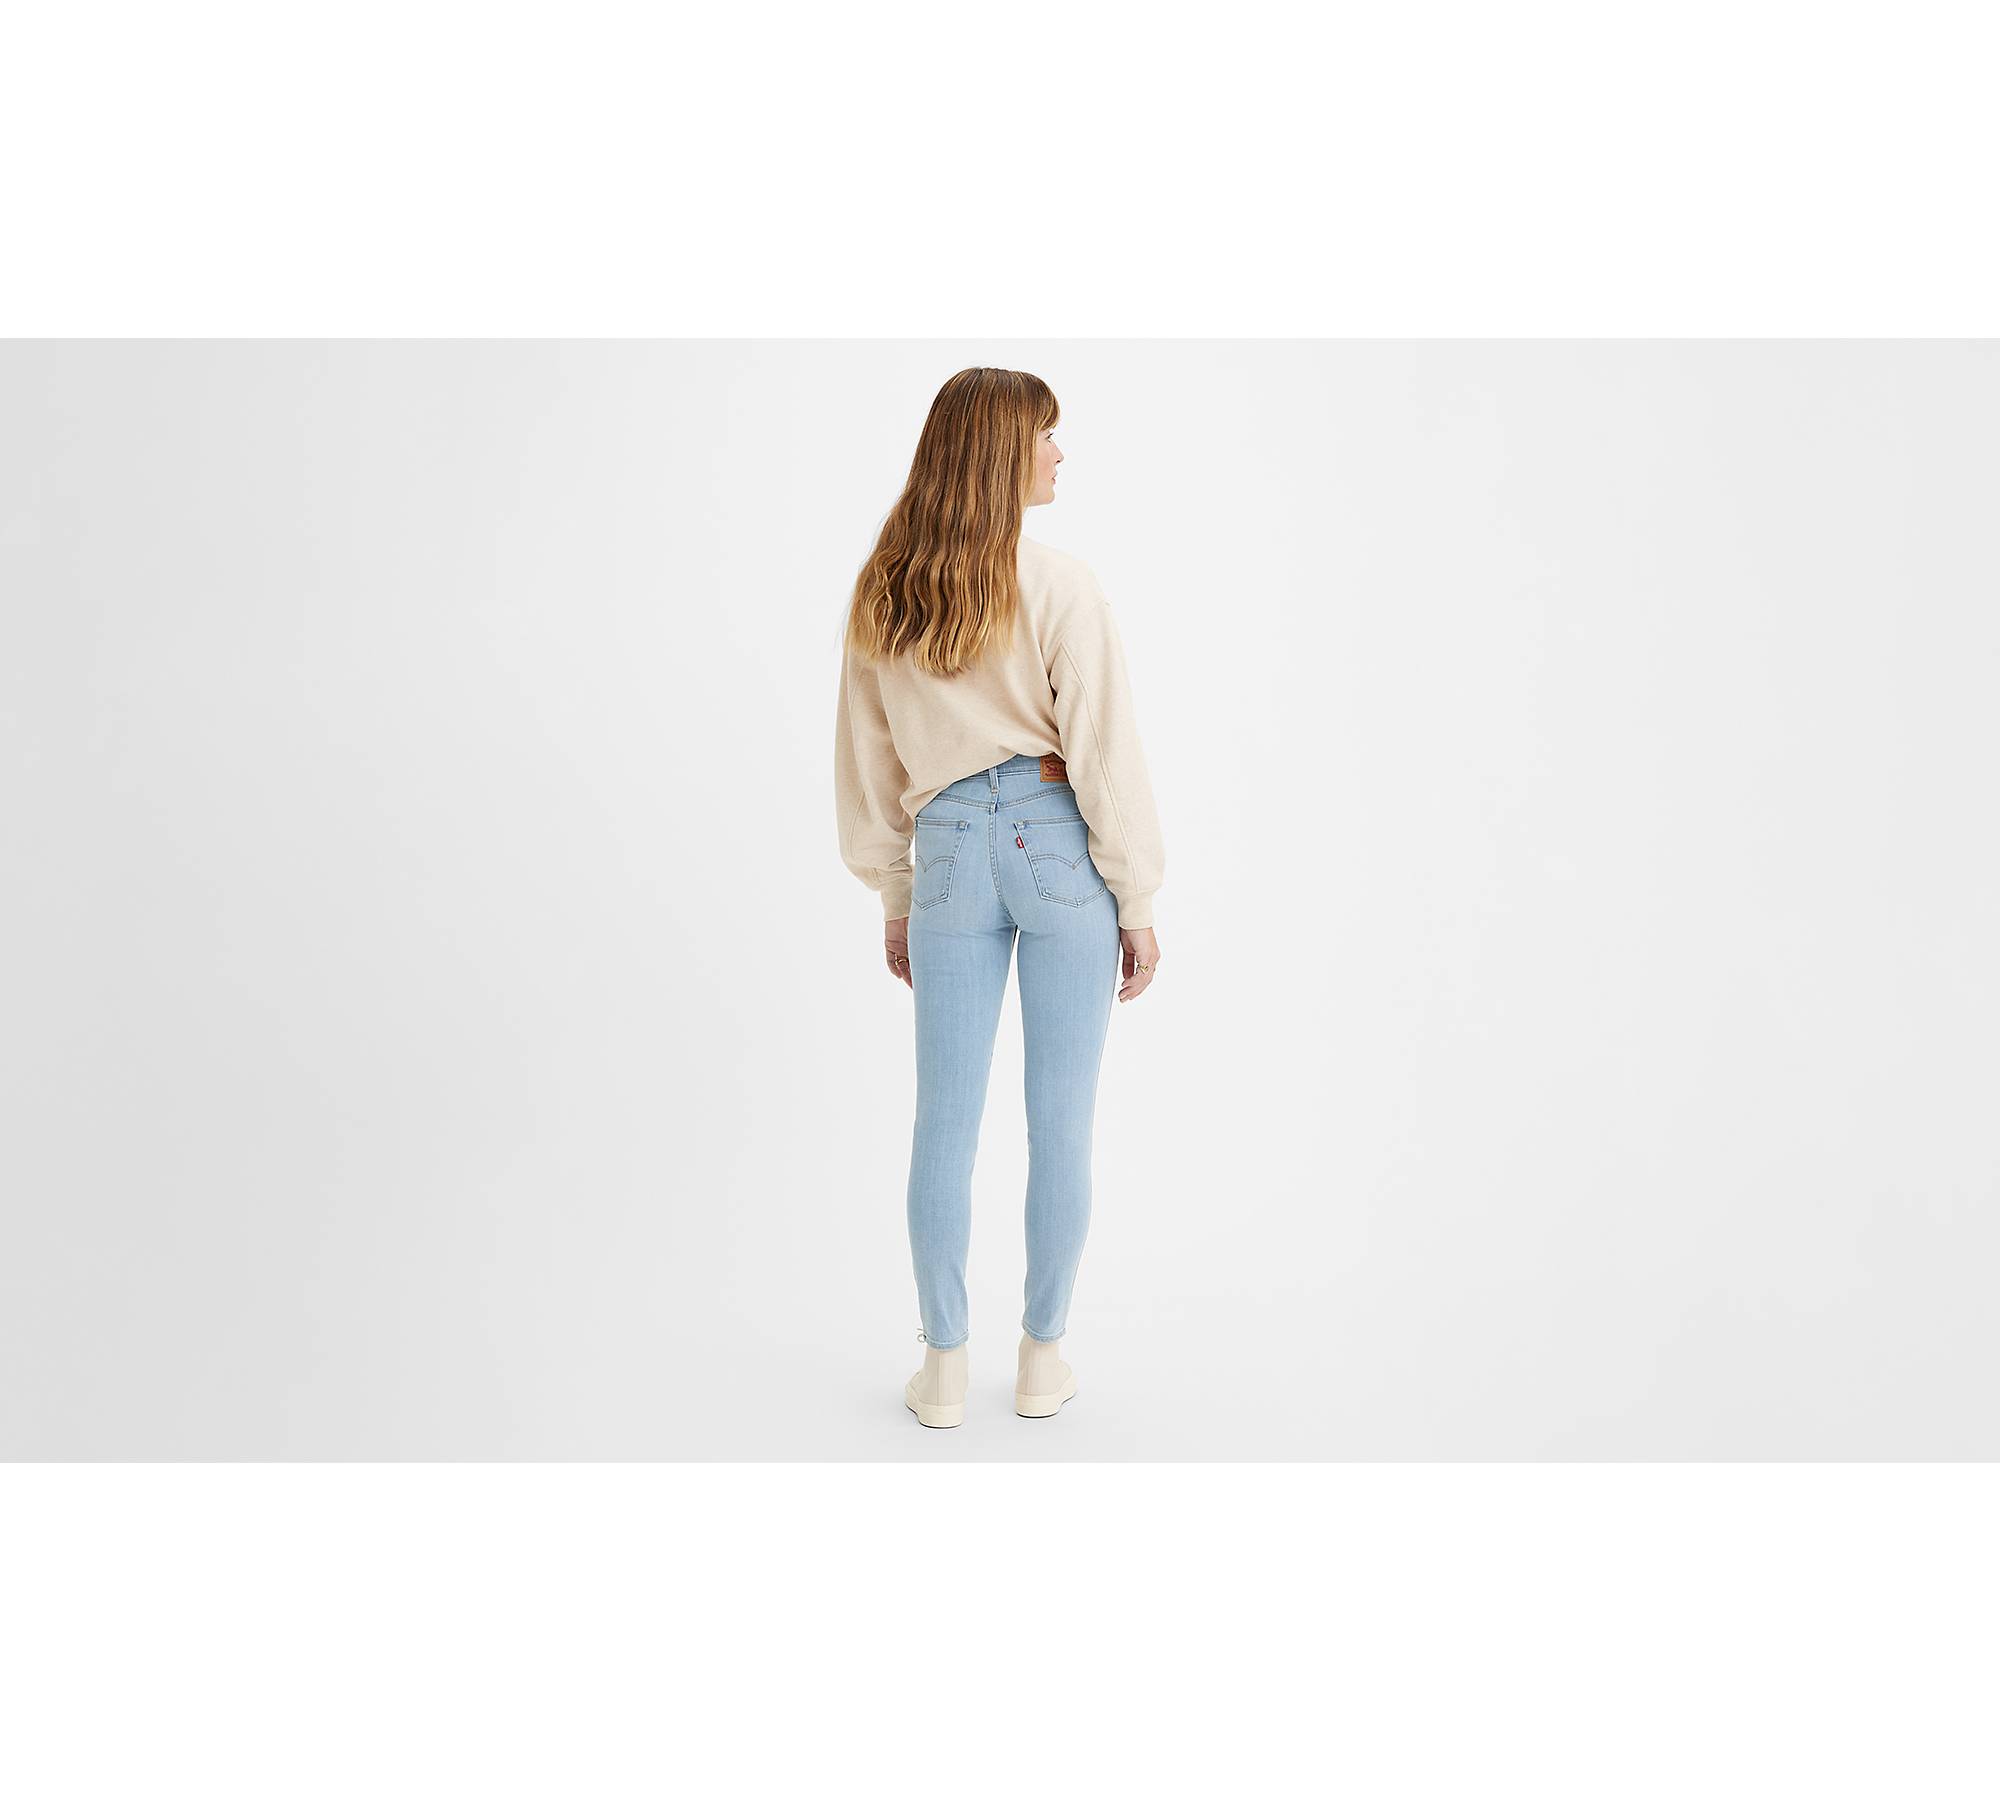 Jeans Pantalon Levis 721 Mujer High-rise Skinny Original